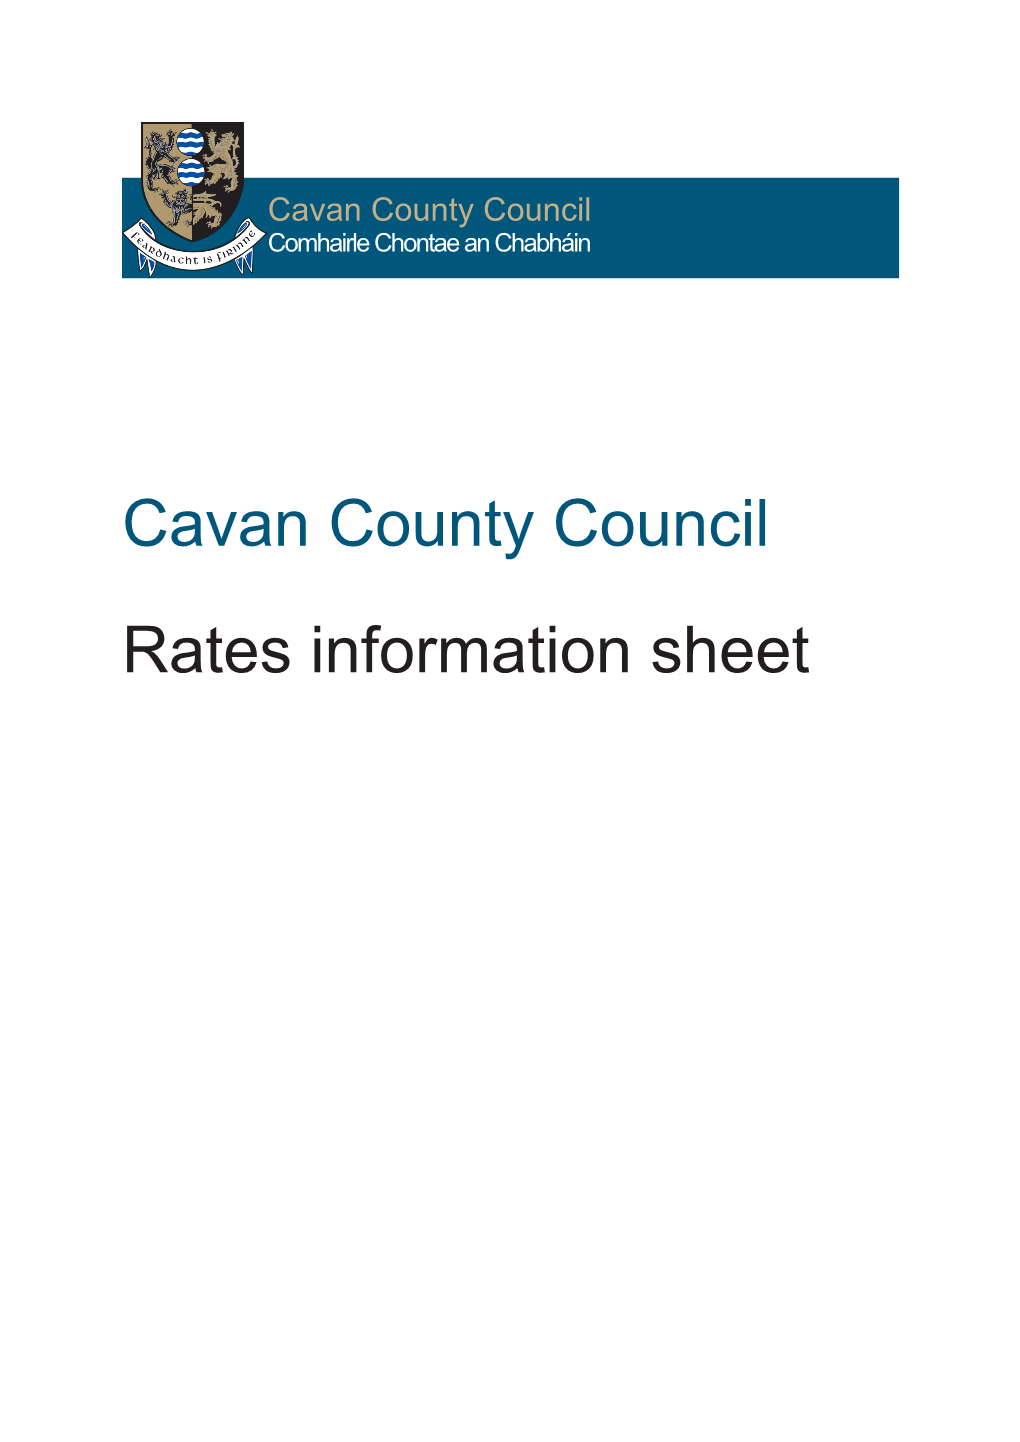 Cavan County Council Rates Information Sheet Cavan County Council Rates Information Sheet